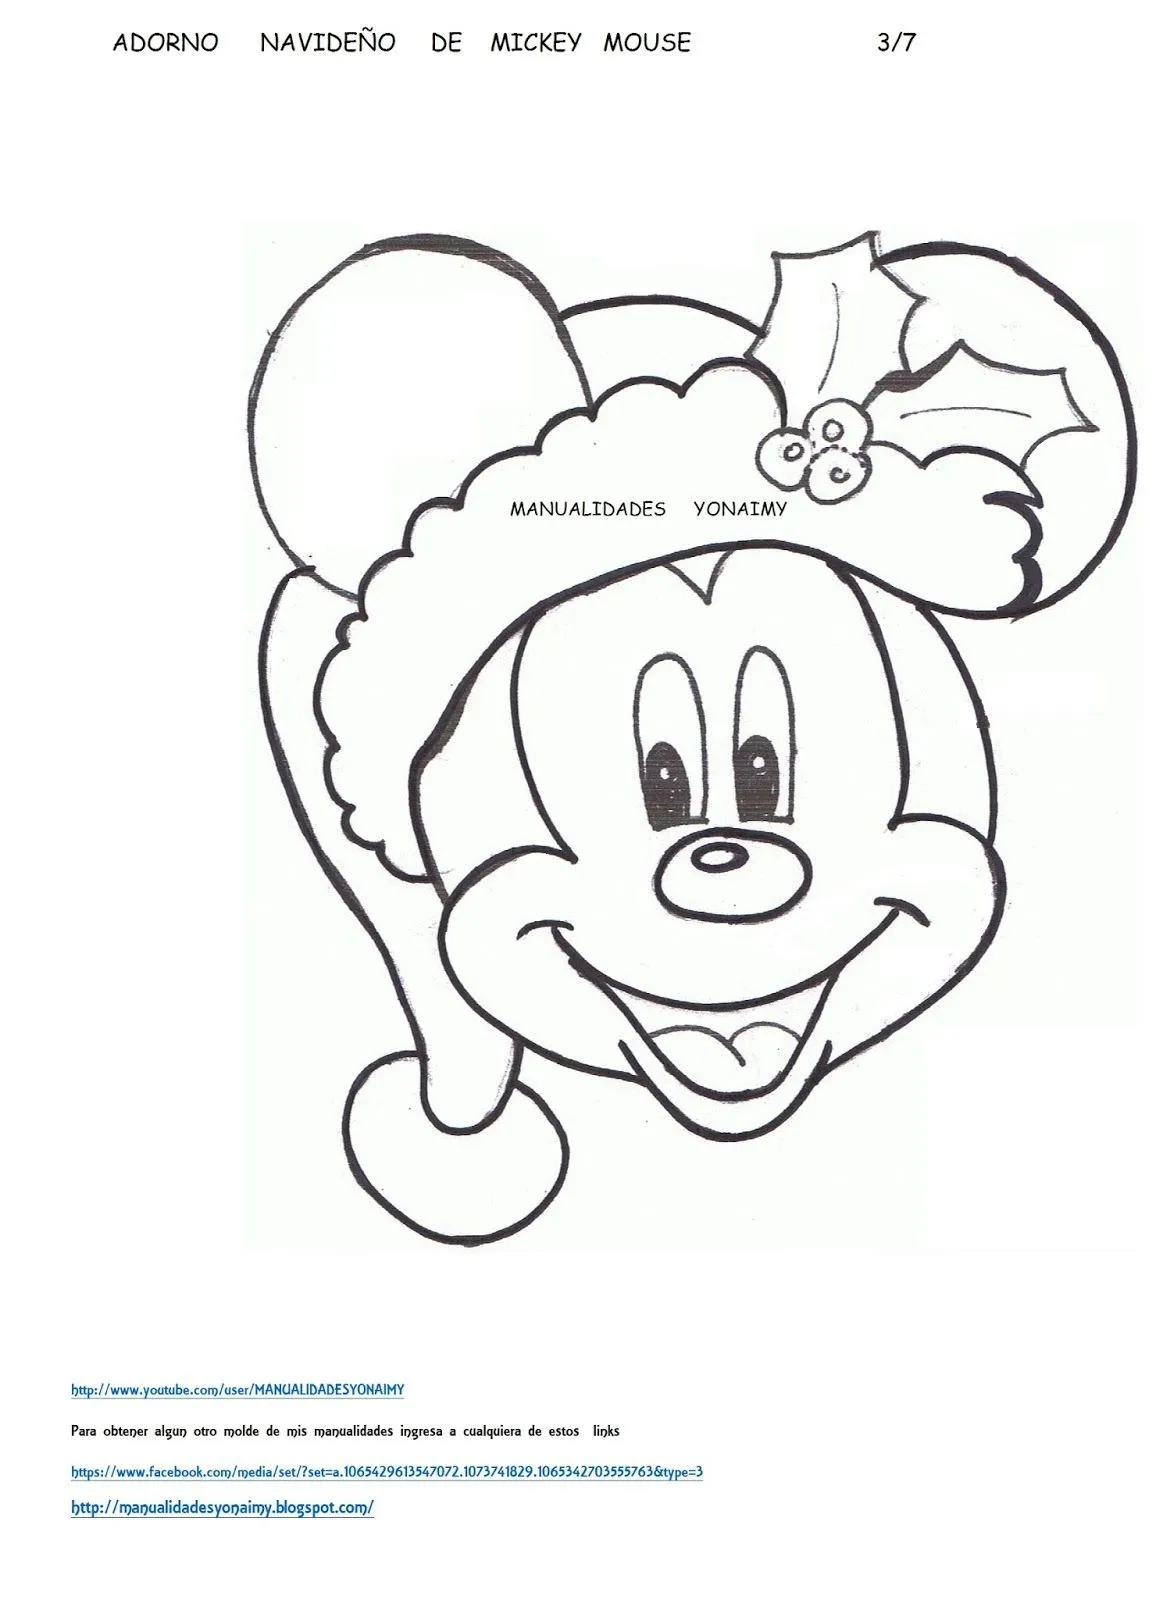 MANUALIDADES YONAIMY | Minnie navideña, Fieltro manualidades navidad, Molde  de mickey mouse